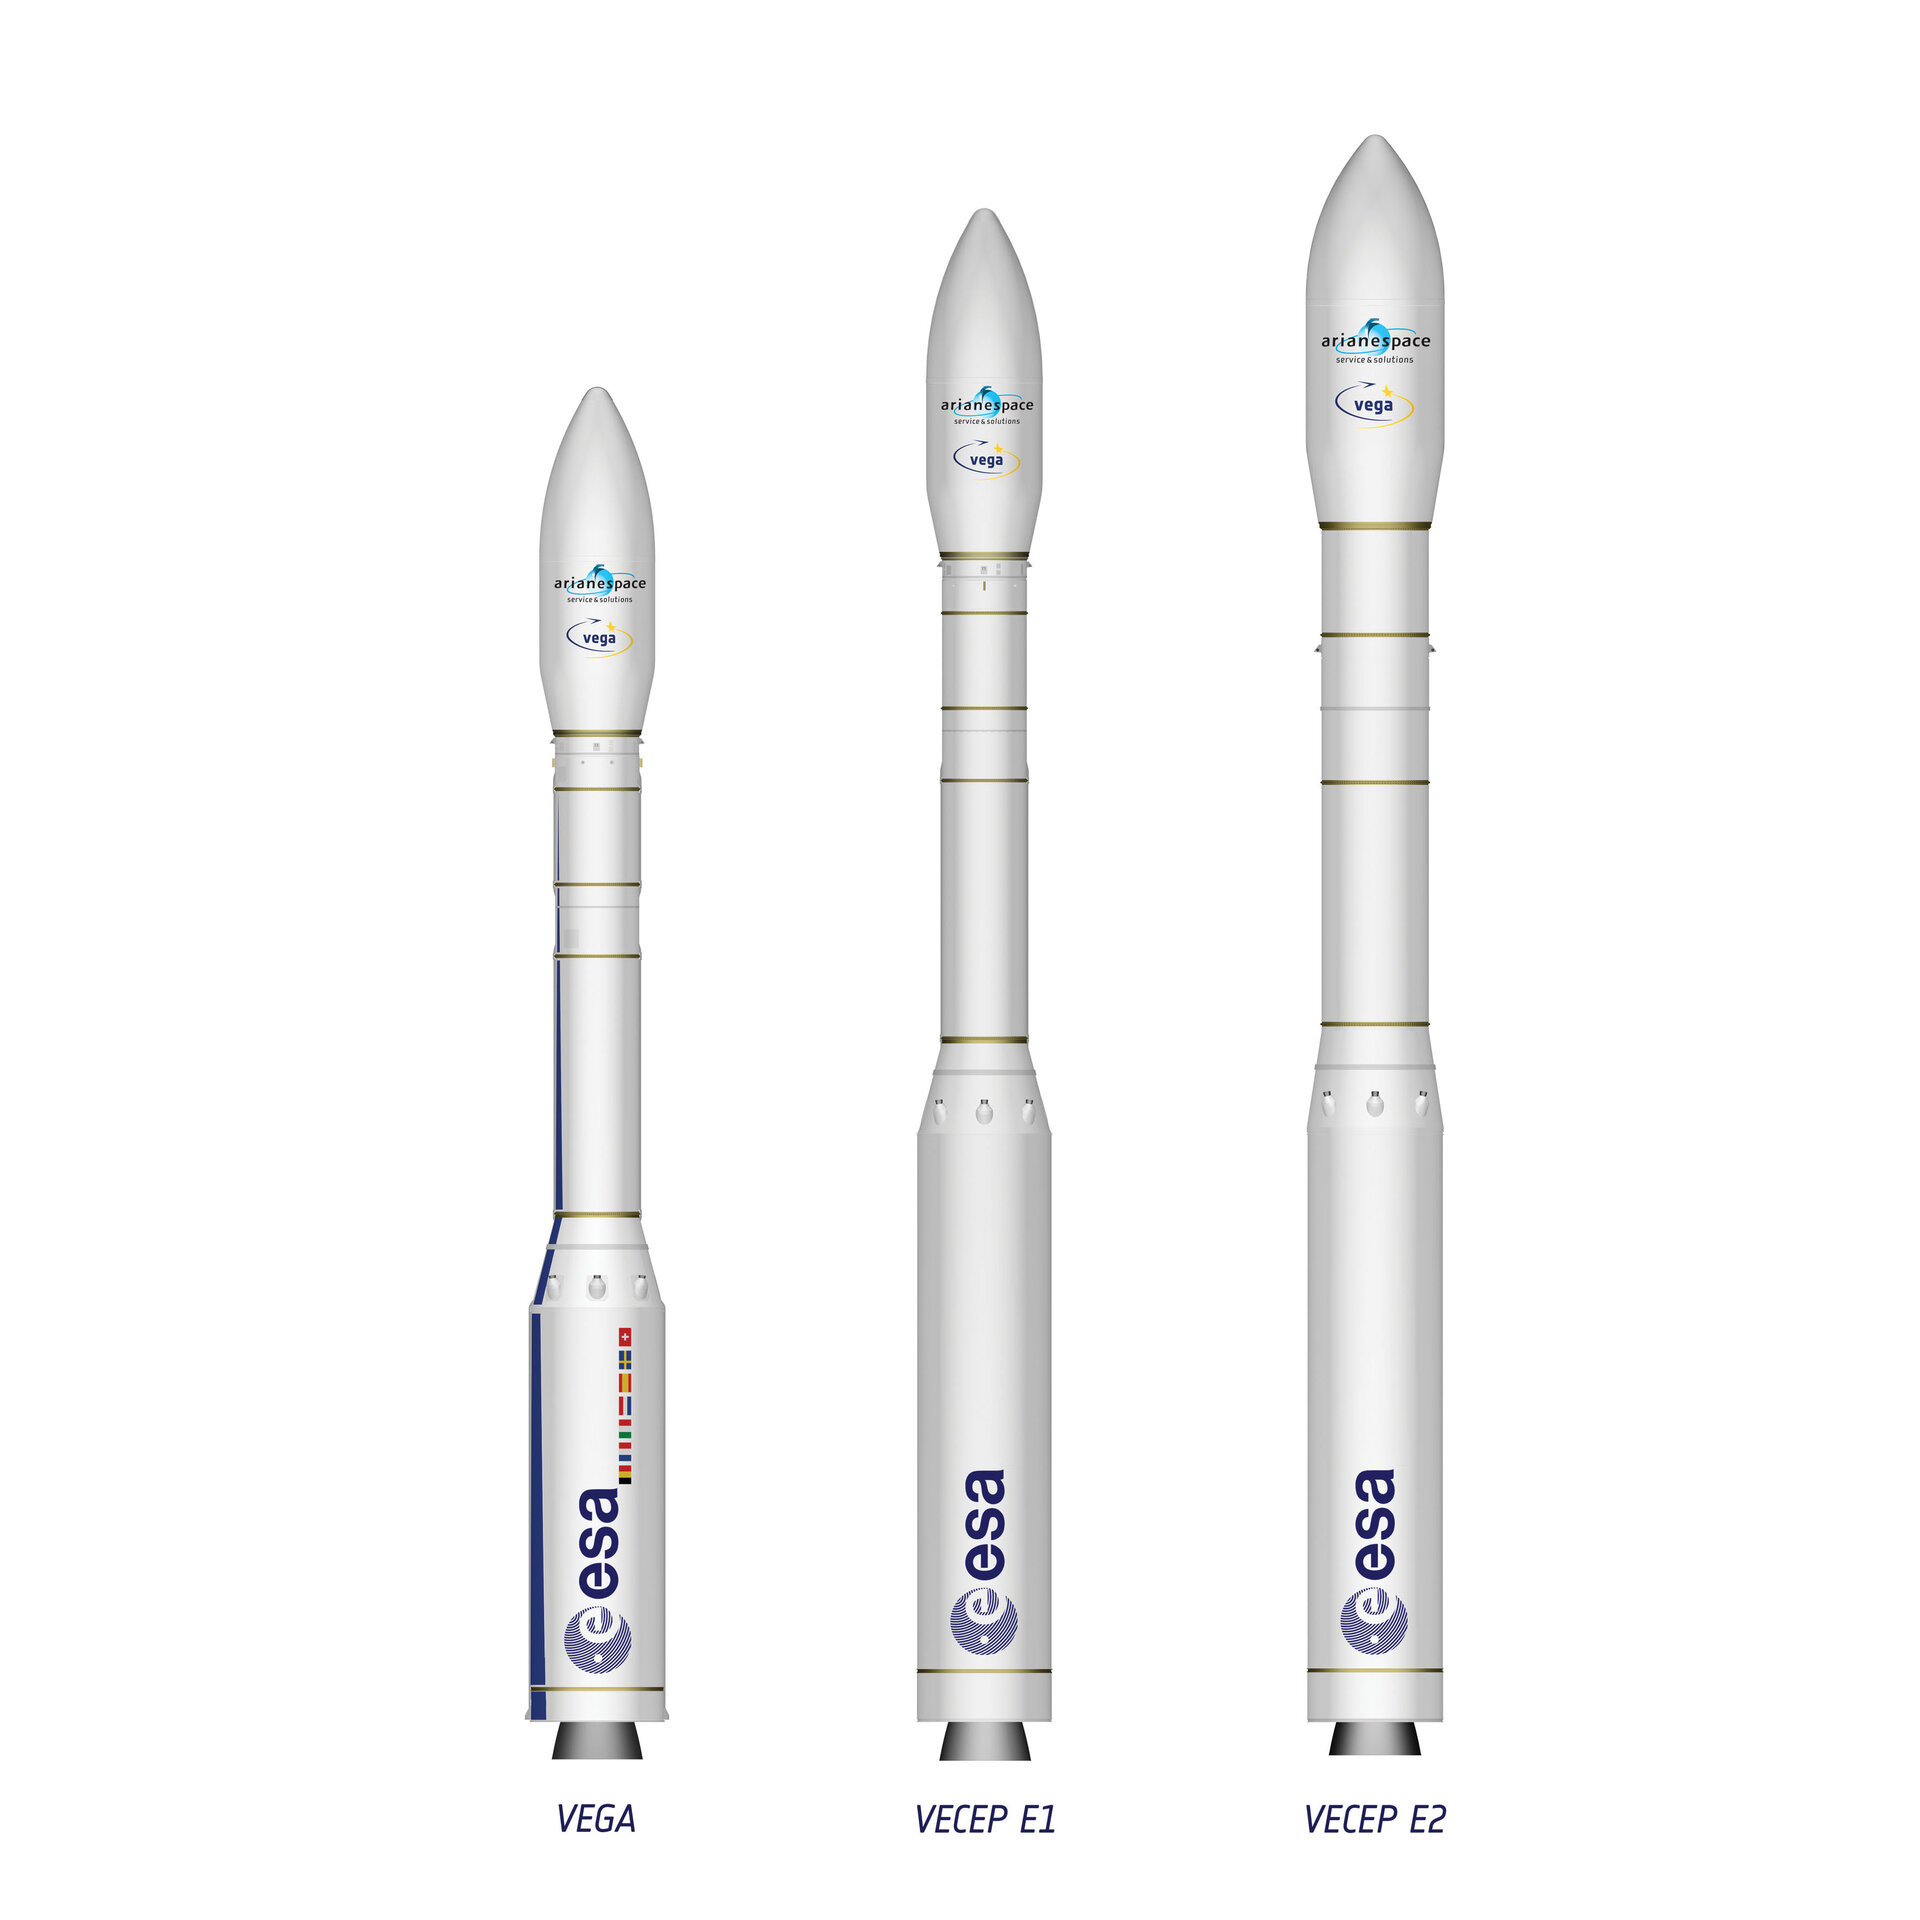 Vega with Vega Evolution launcher concepts